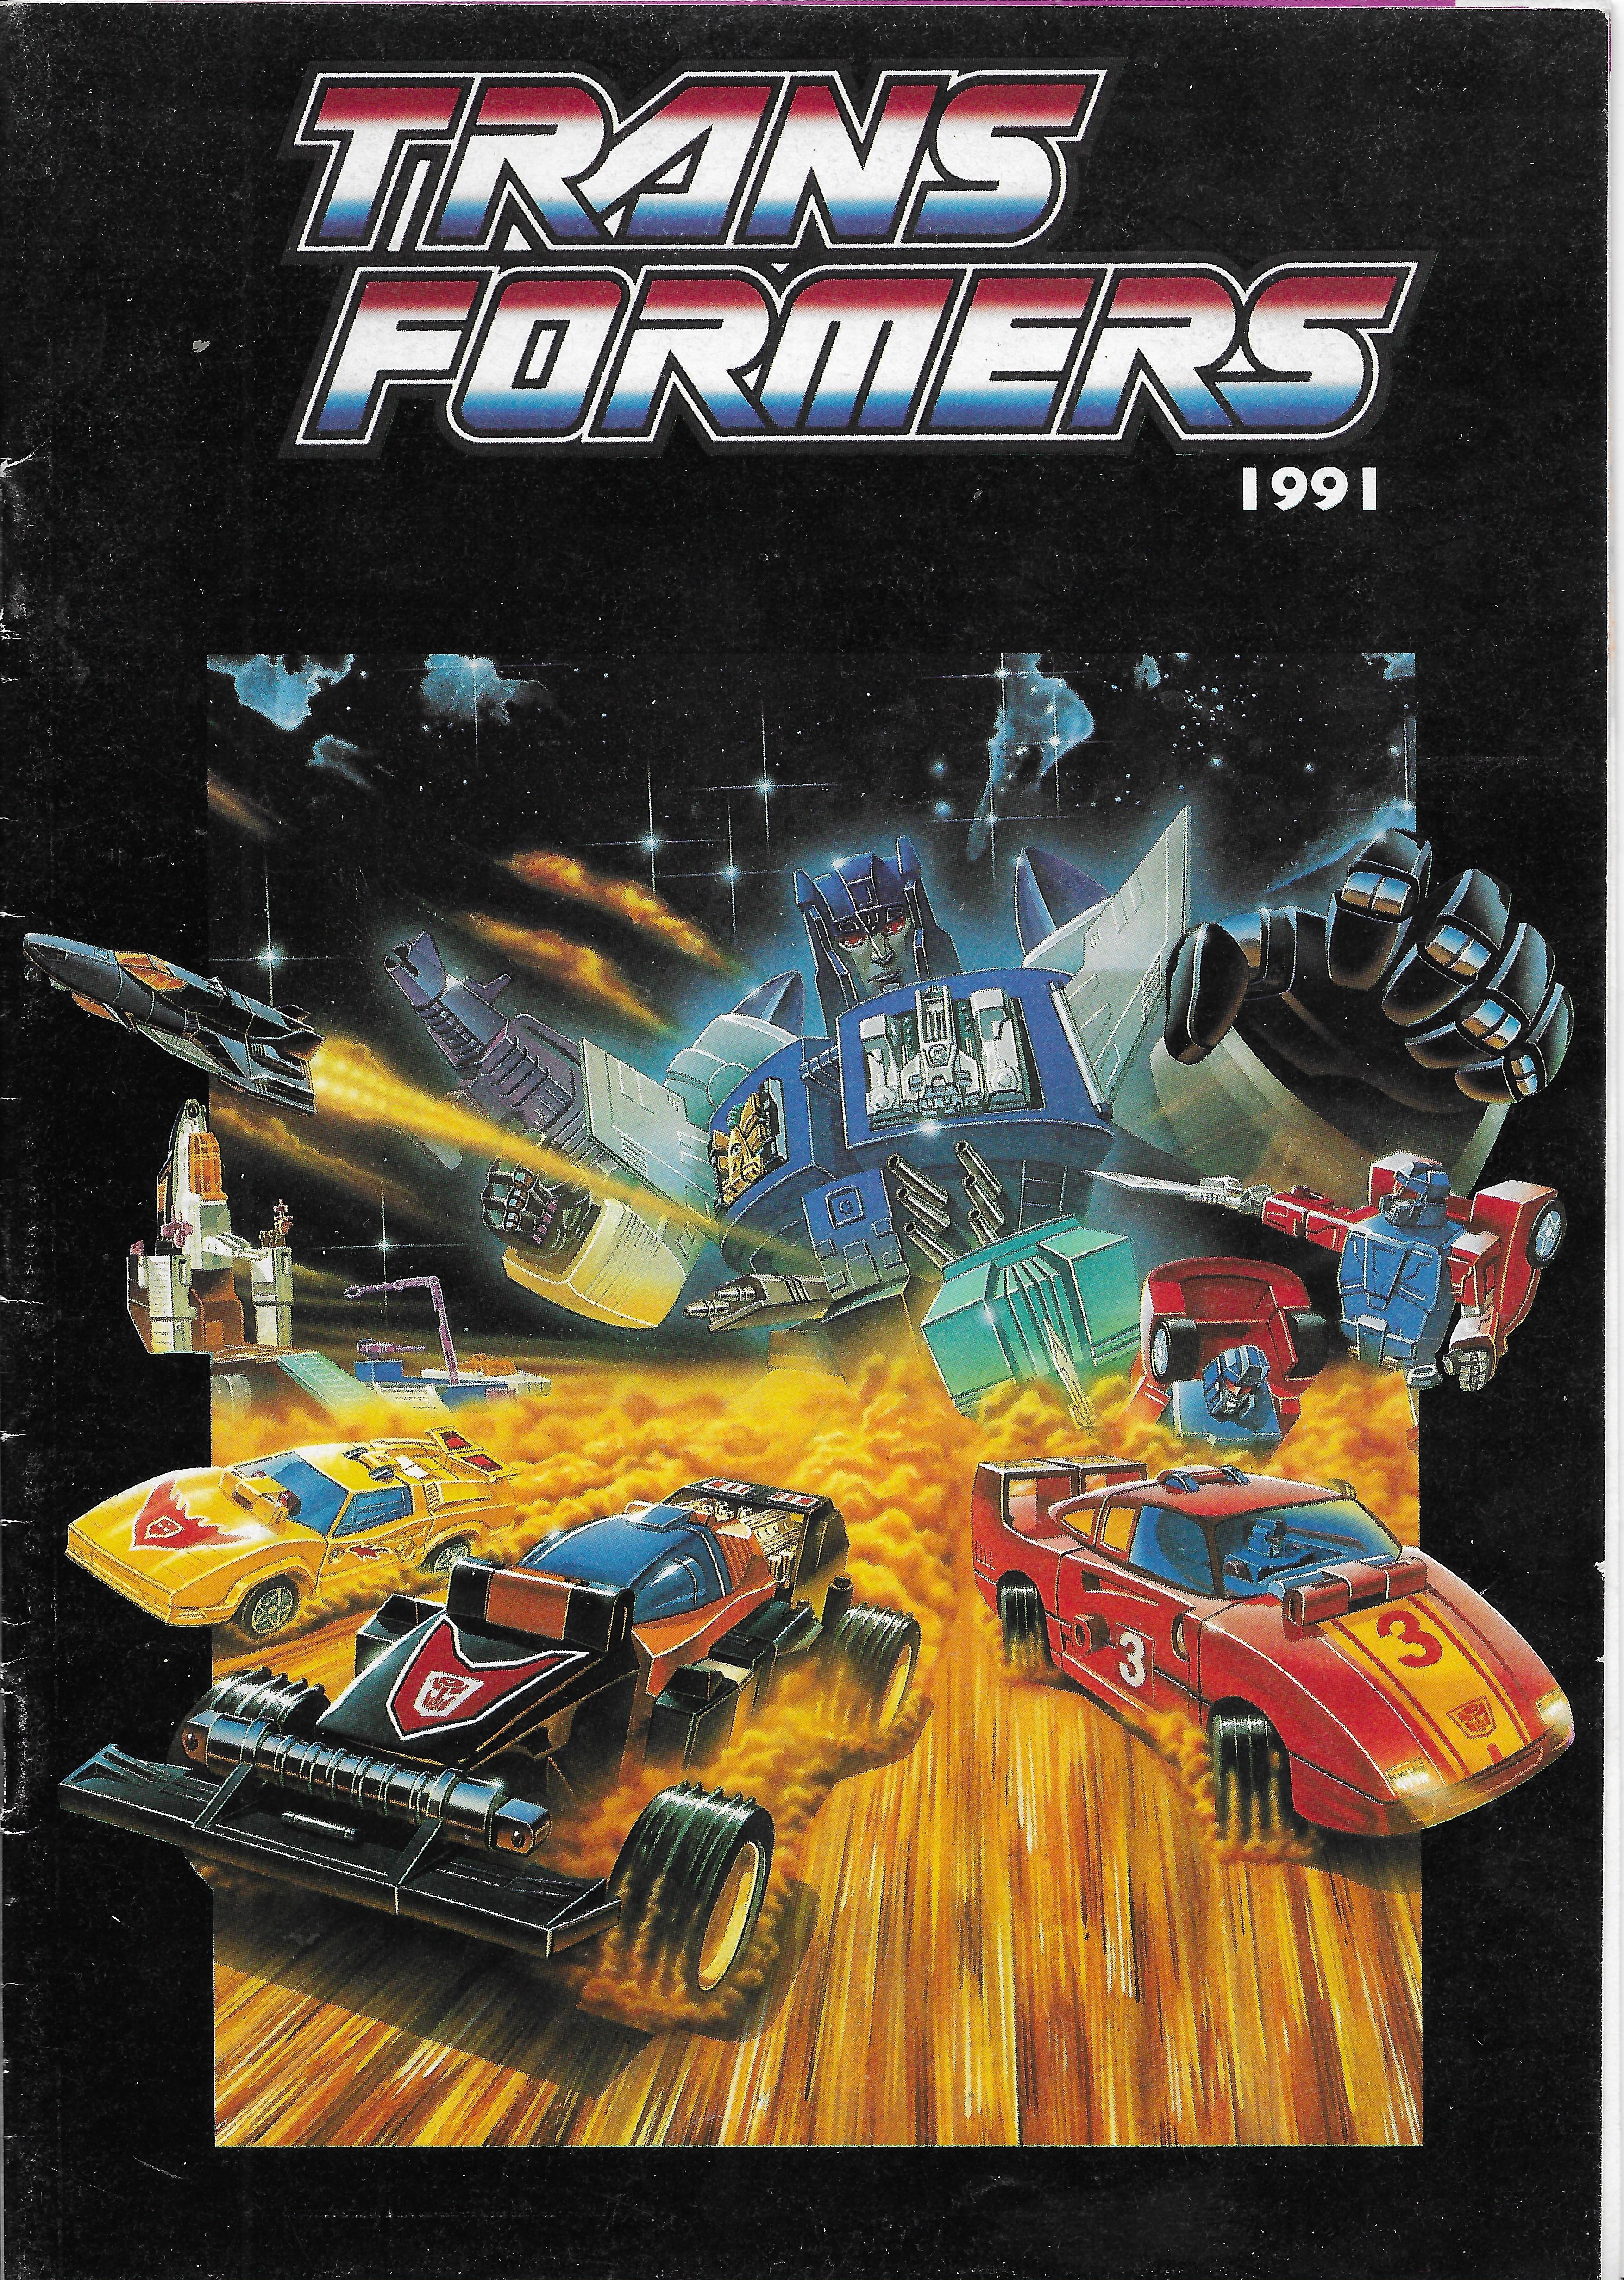 Európai Transformers katalógus 1991-ből